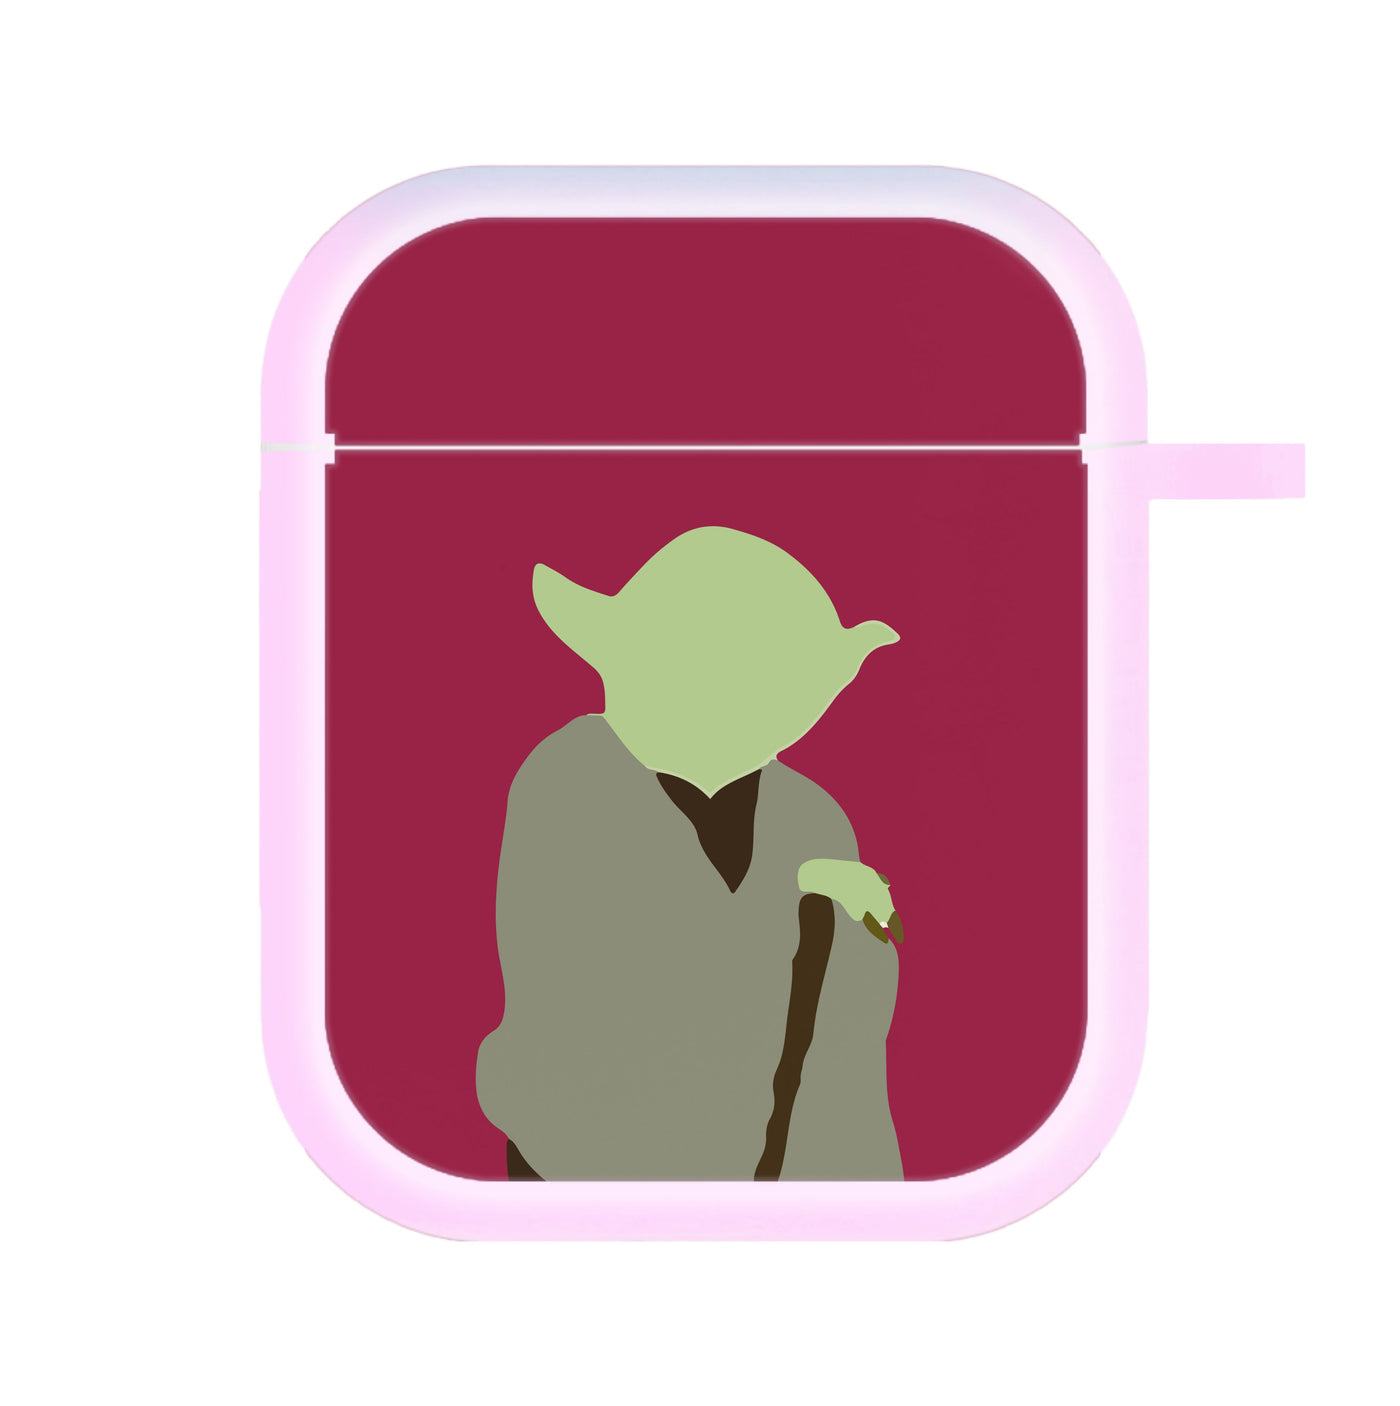 Yoda Faceless - Star Wars AirPods Case